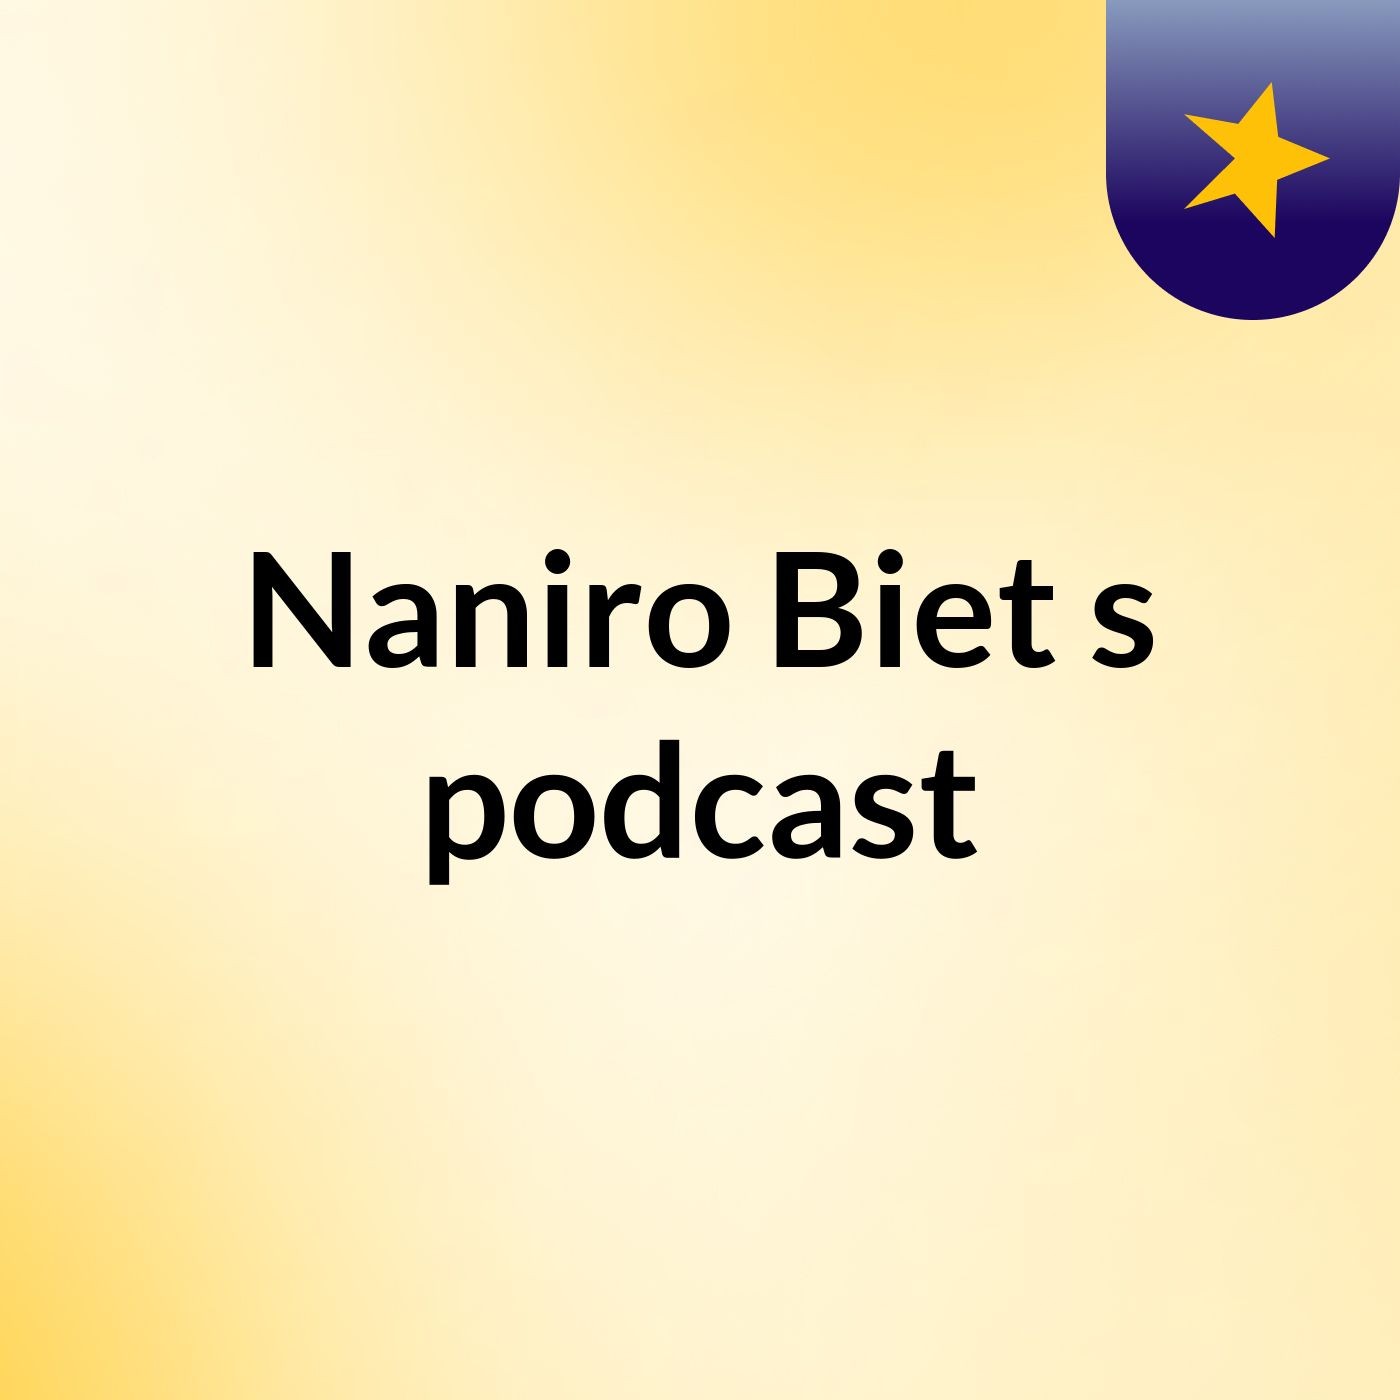 Naniro Biet's podcast